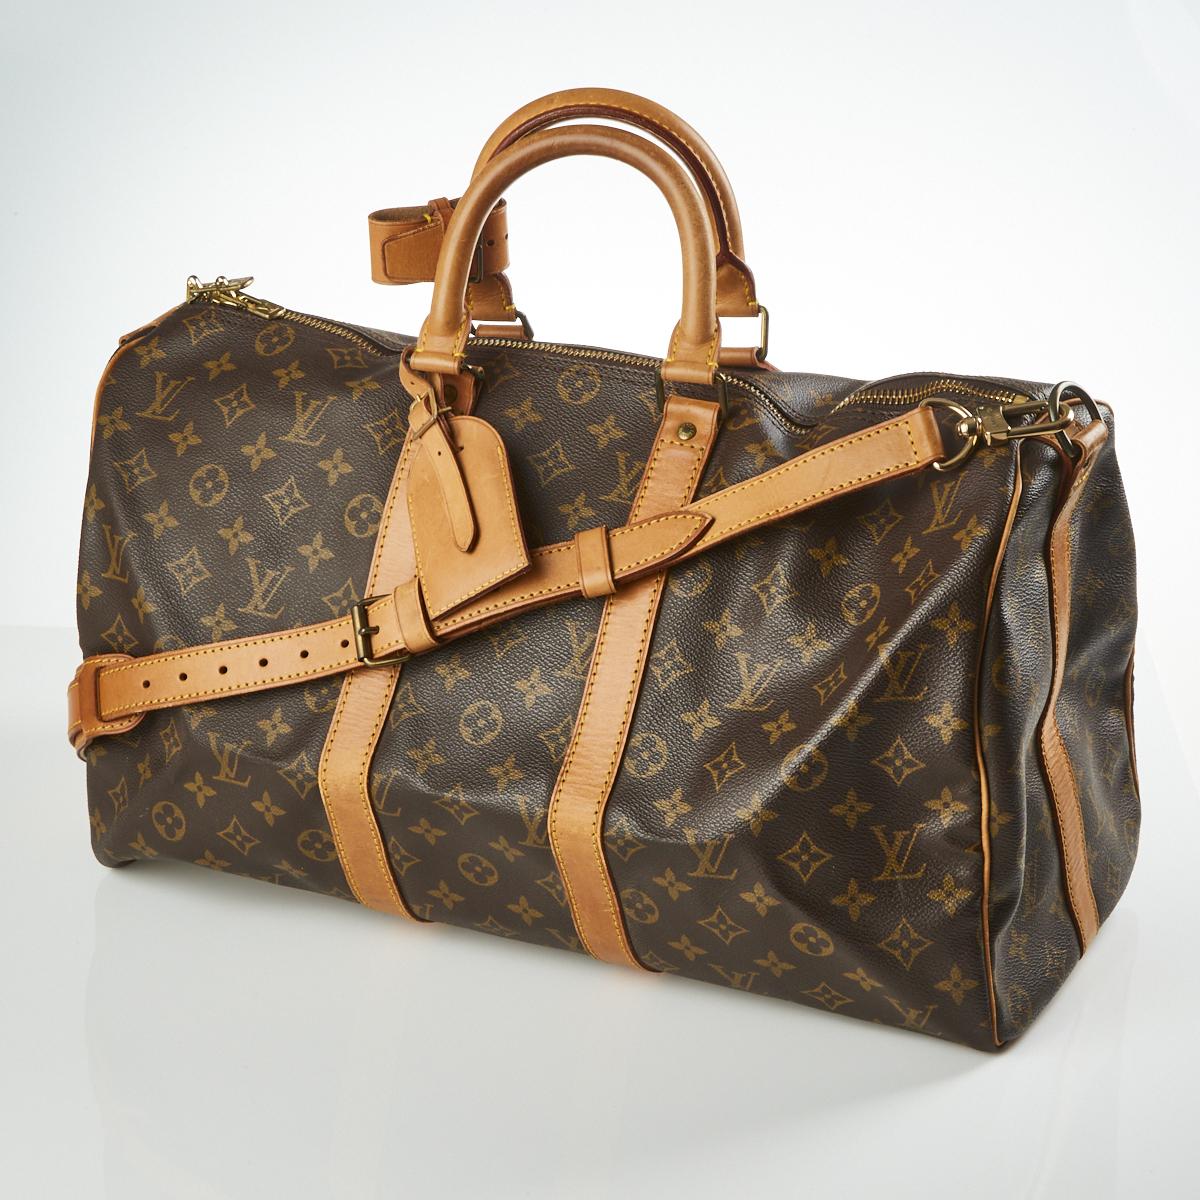 Sold at Auction: Louis Vuitton, Louis Vuitton Keepall Bandouliere Duffle Bag